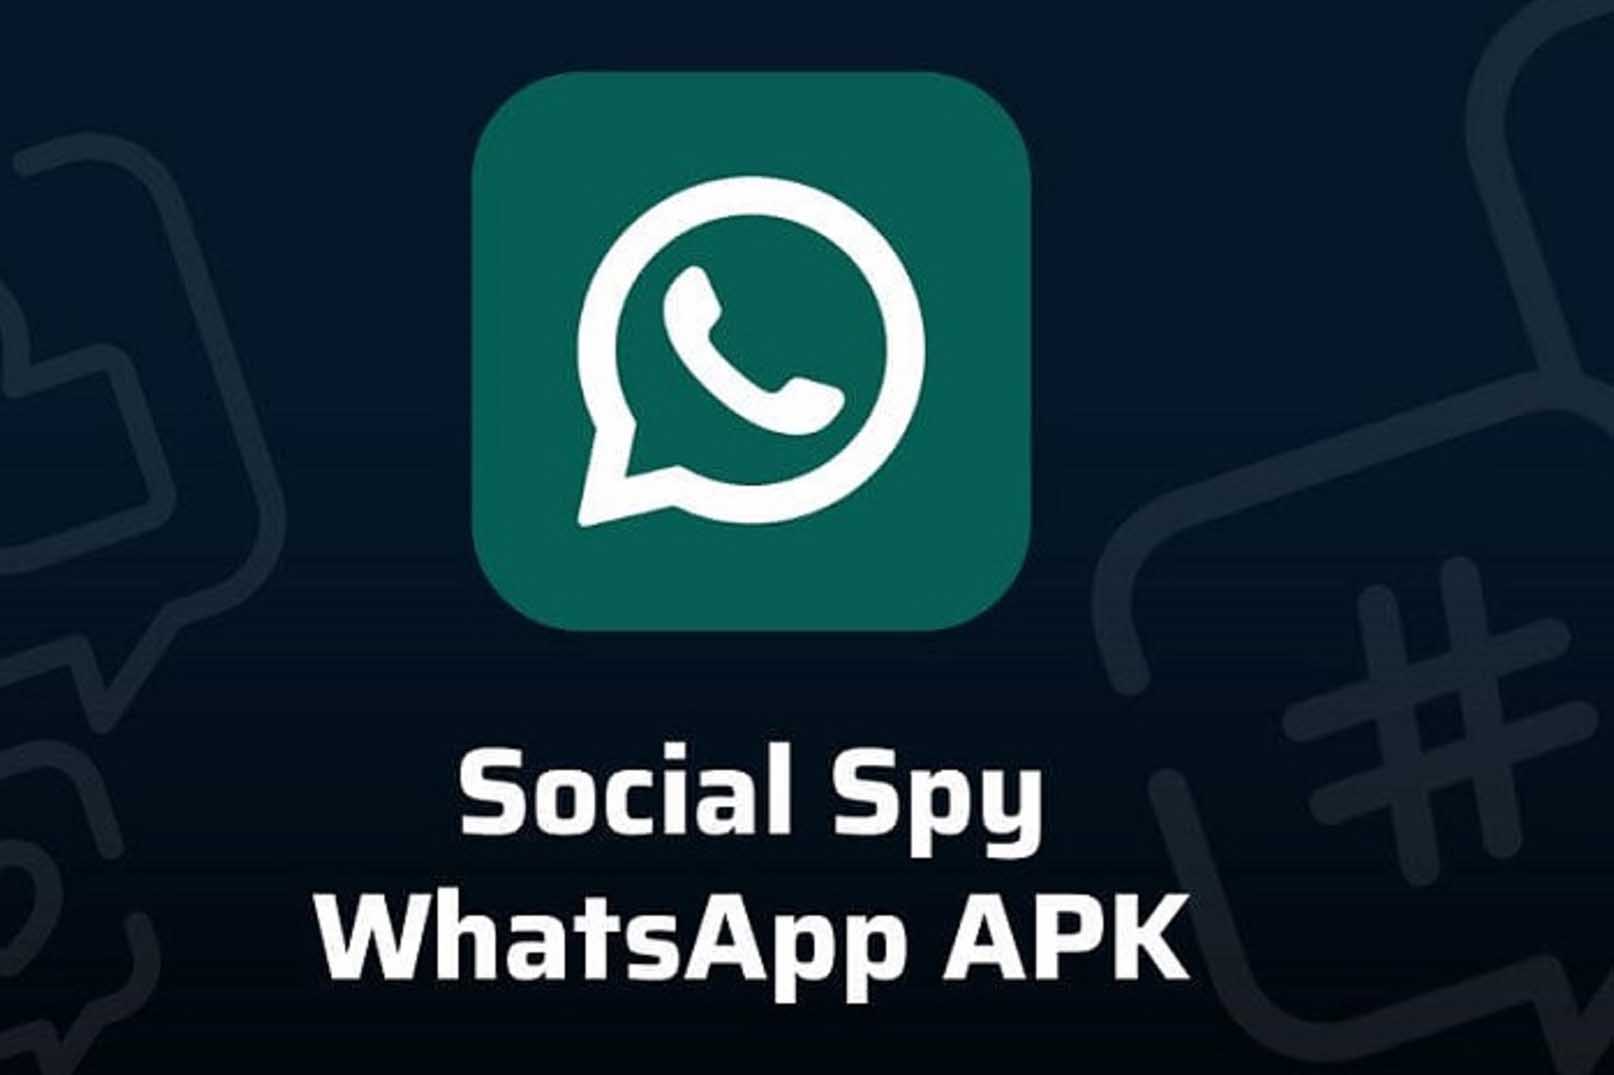 Mengulik Fitur Dari Social Spy Whatsapp Serta Cara menggunakannya, Simak Selengkapnya